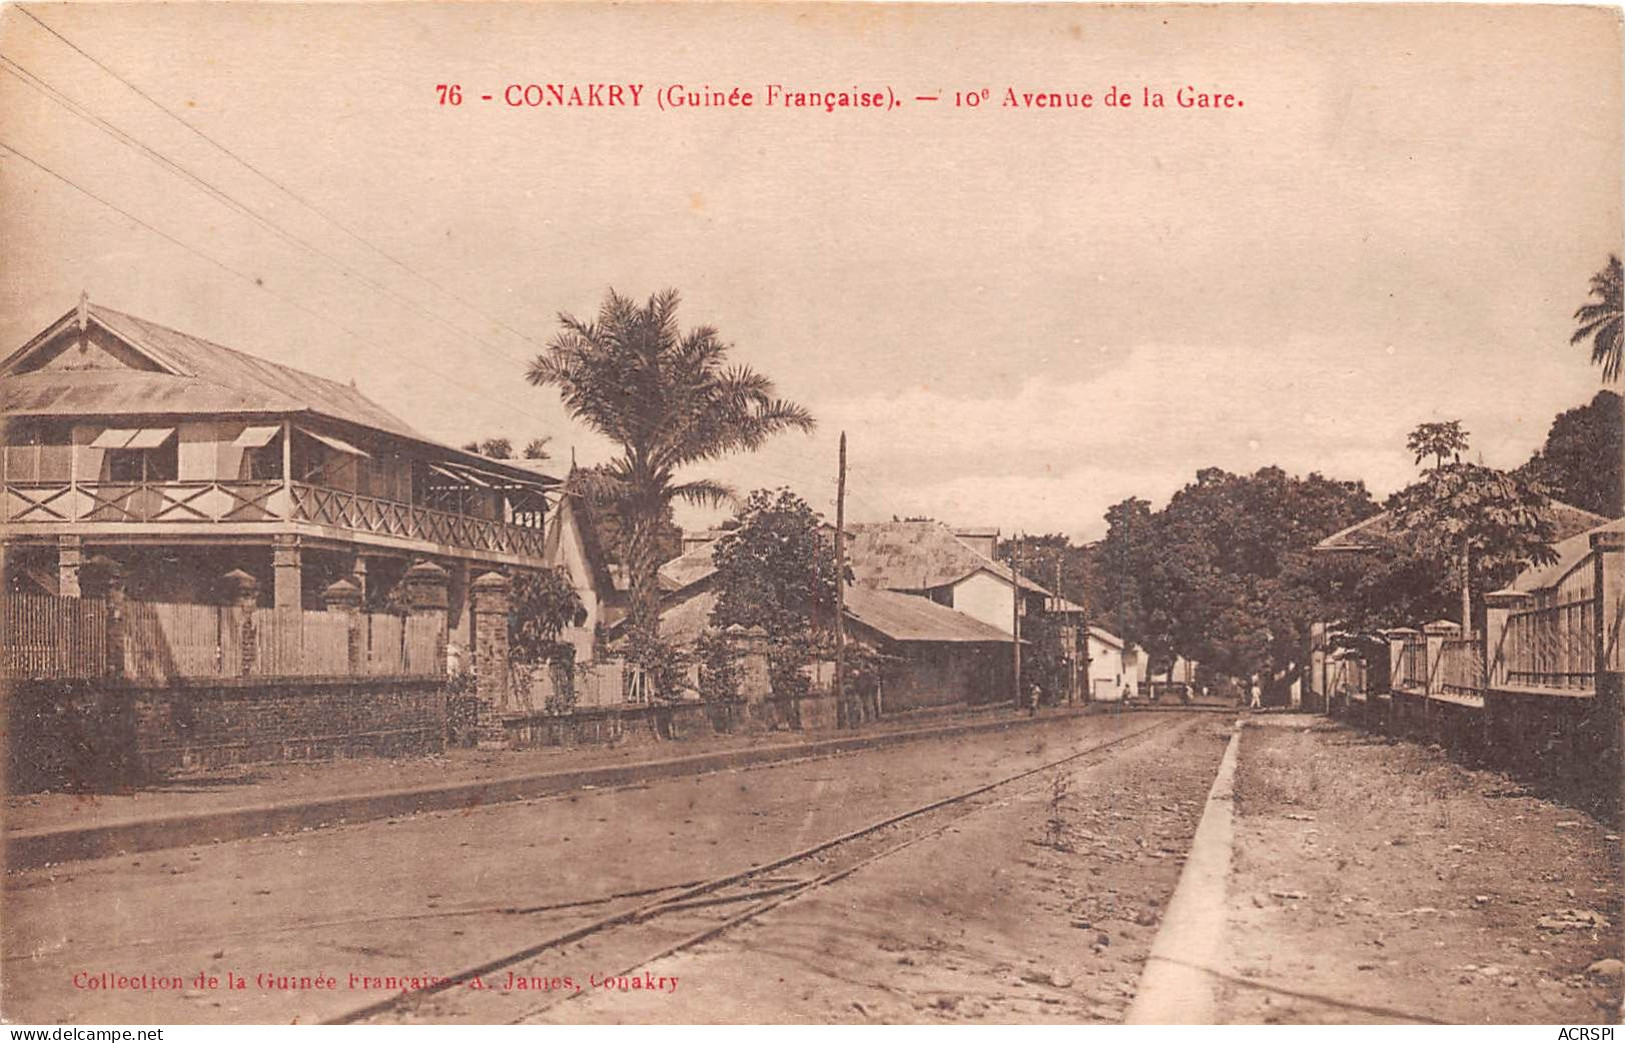 Guinée Française  Conakry  Avenue De La Gare  Rails Du Chemin De Fer 10e Petite Vitesse  OO 0955 - Guinée Française